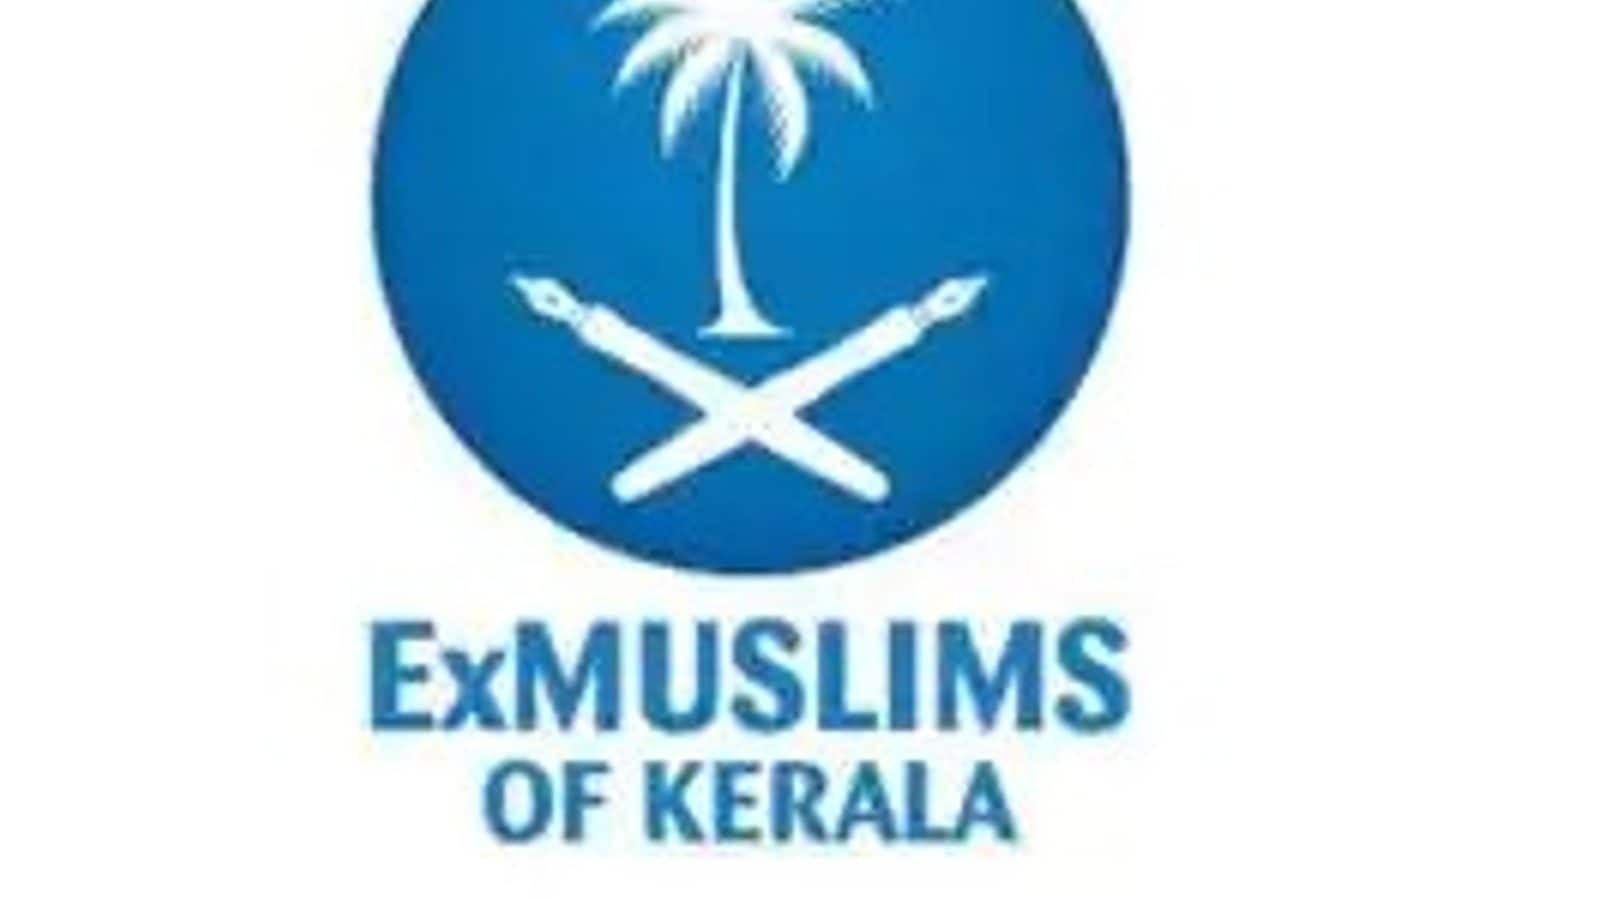 Ex-Muslims of Kerala| ഇസ്ലാം മതം ഉപേക്ഷിച്ചവരുടെ കൂട്ടായ്മ നിലവില്‍ വന്നു;  മതമുപേക്ഷിച്ചവർക്ക് സാമൂഹ്യപിന്തുണ നൽകുക ലക്ഷ്യം| ex muslims of kerala  formed a unit to ...